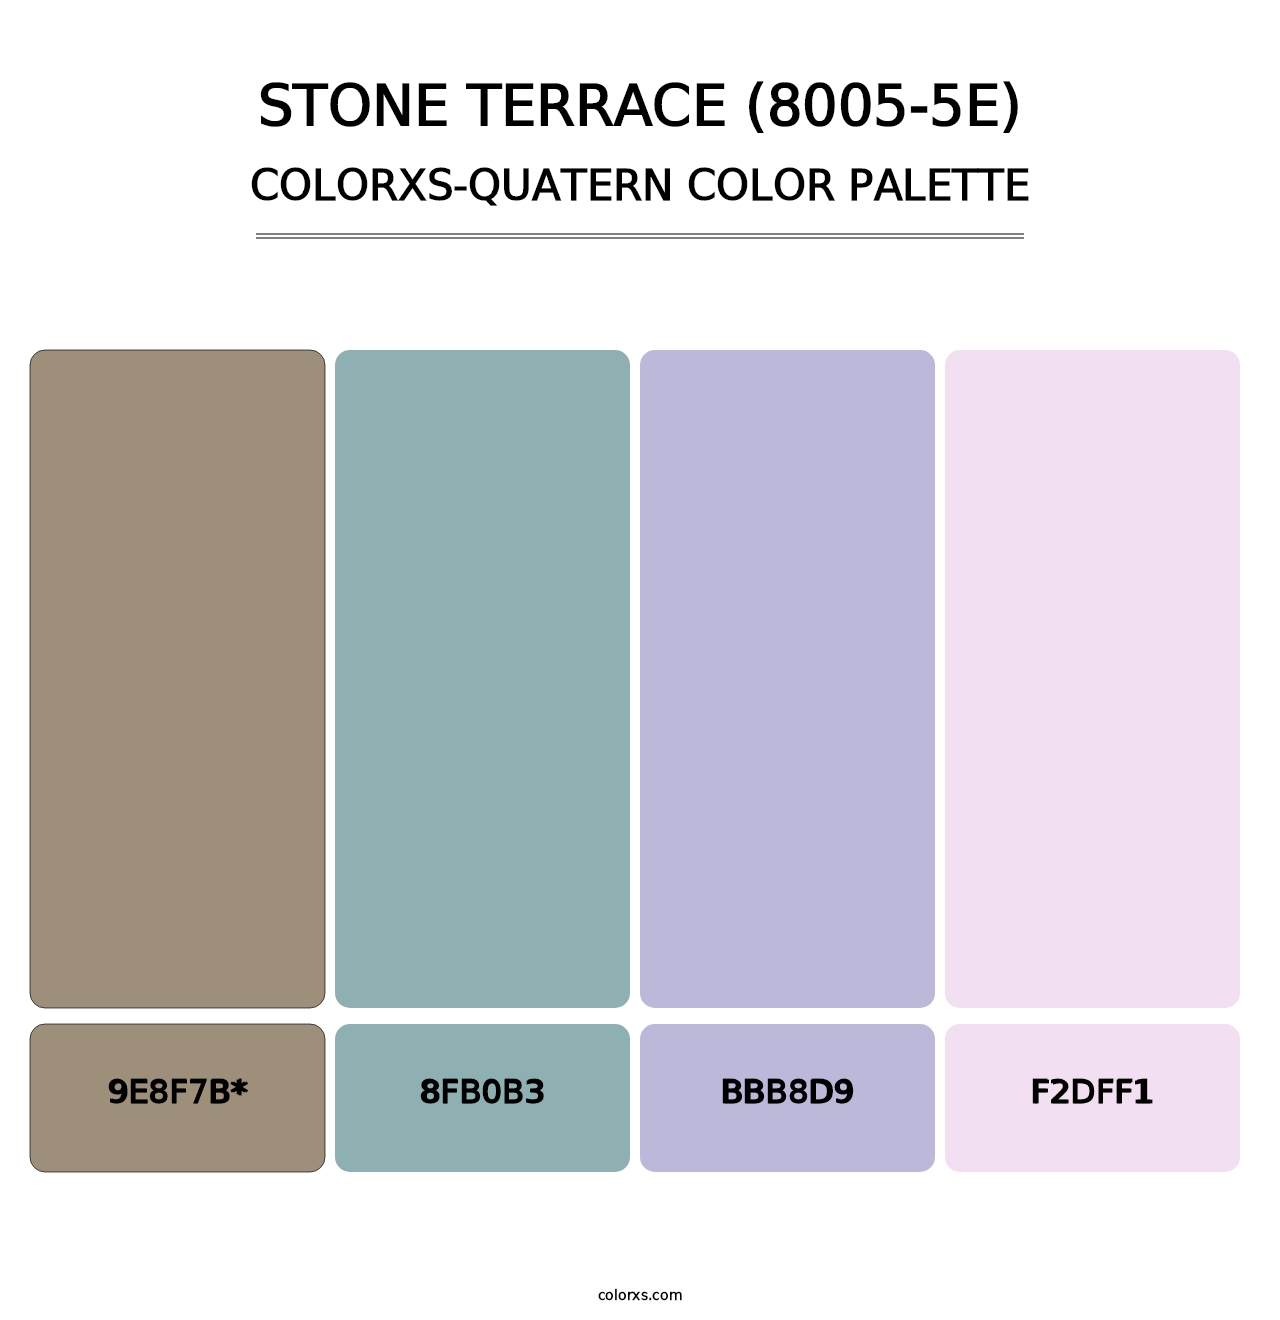 Stone Terrace (8005-5E) - Colorxs Quatern Palette